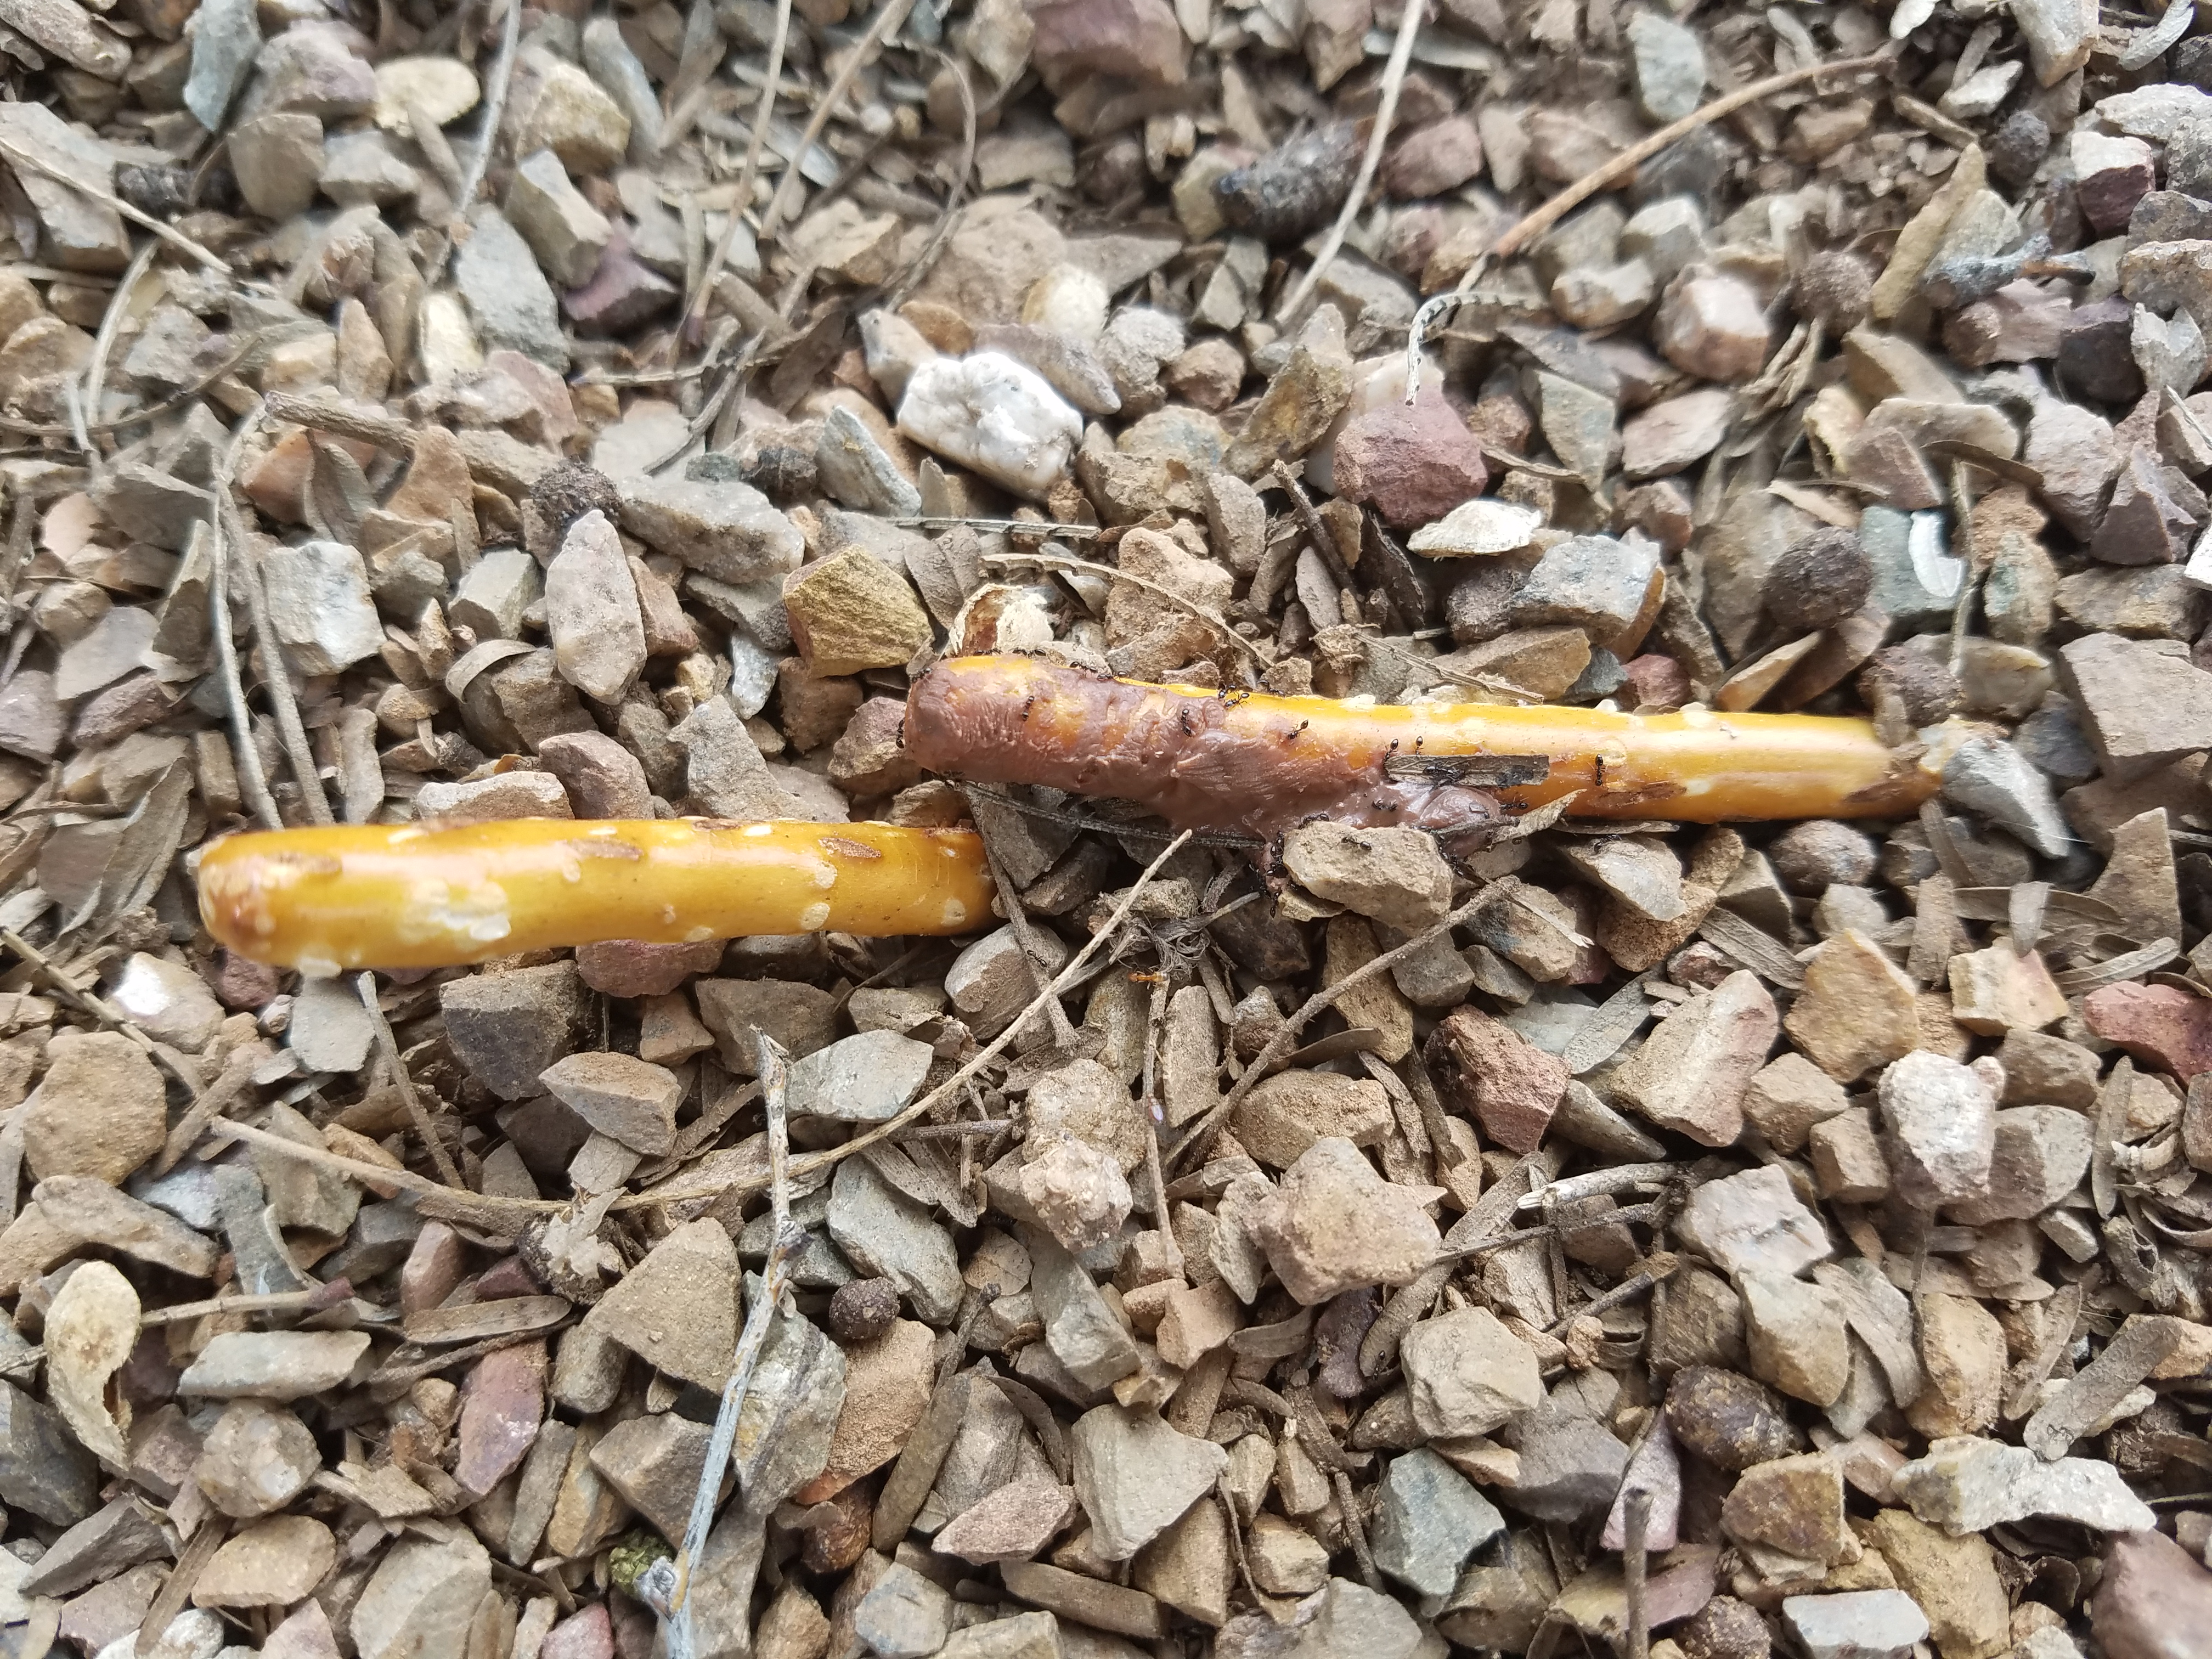 ants on the nutella sticks